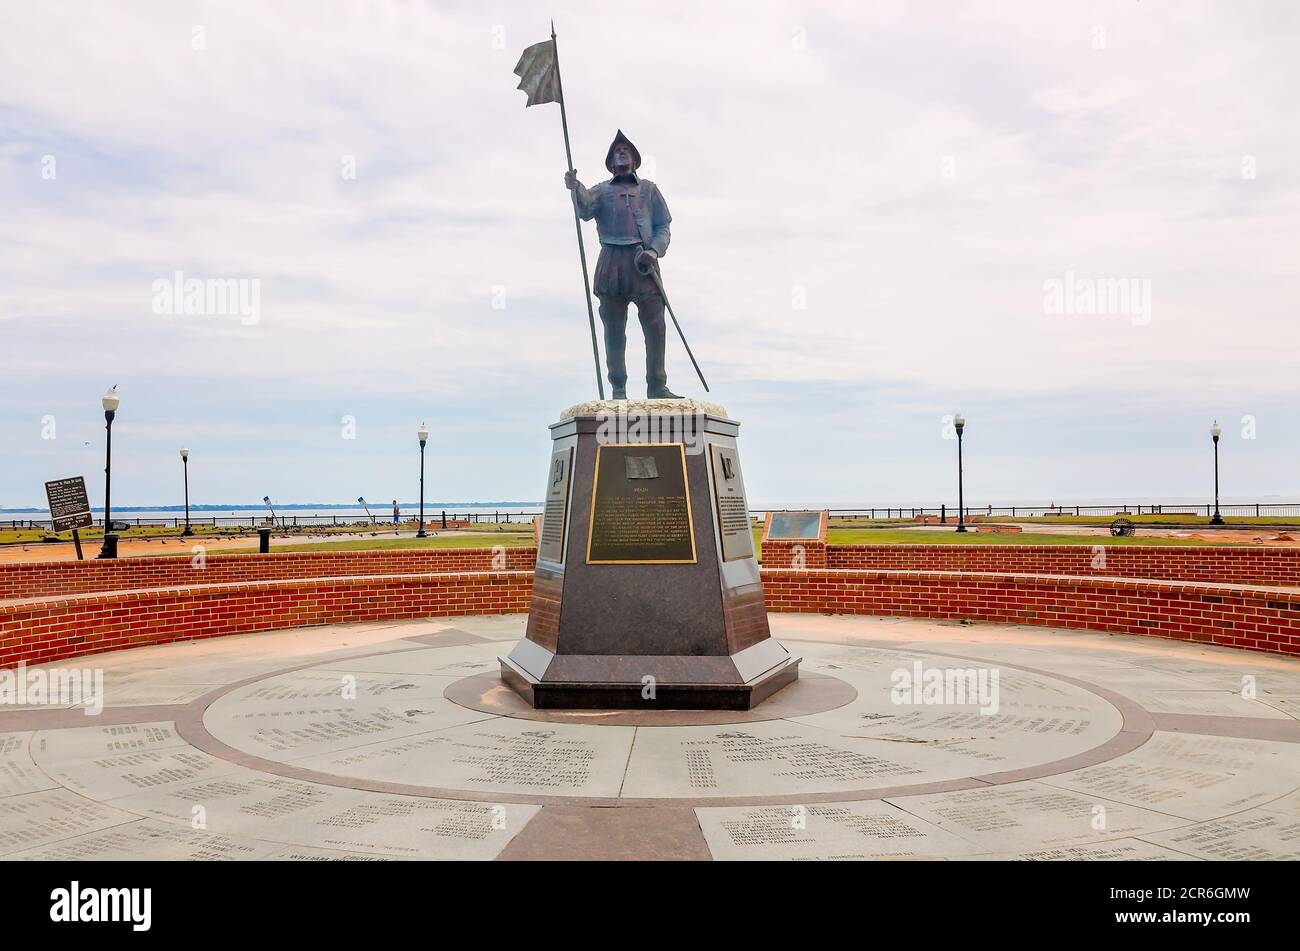 A statue of Spanish explorer Tristan de Luna stands in Plaza de Luna by Palafox Pier, Sept. 18, 2020, in Pensacola, Florida. Stock Photo